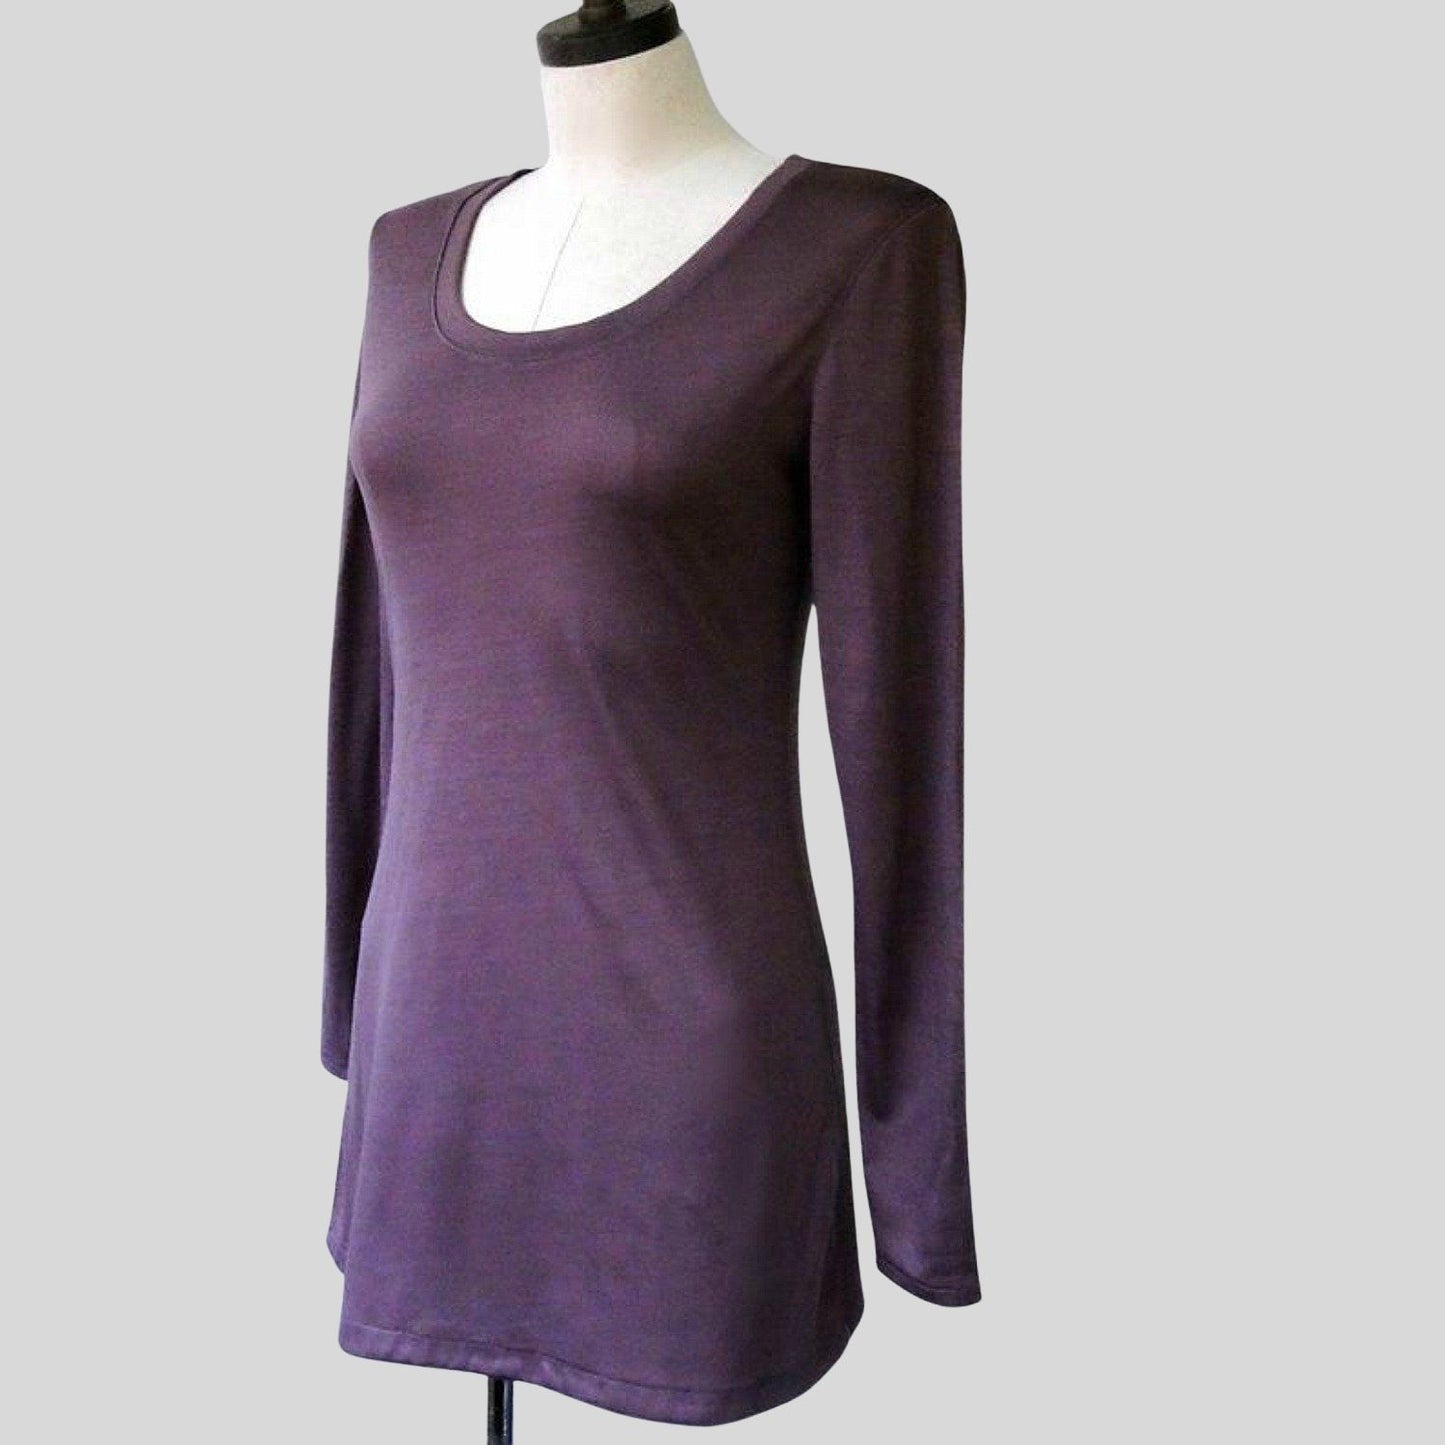 purple Tunic top merino wool | Tunic top in merino wool for women | Shop Women's wool clothes + tops made in Canada | Canadian Women's wool clothing shop | Econica